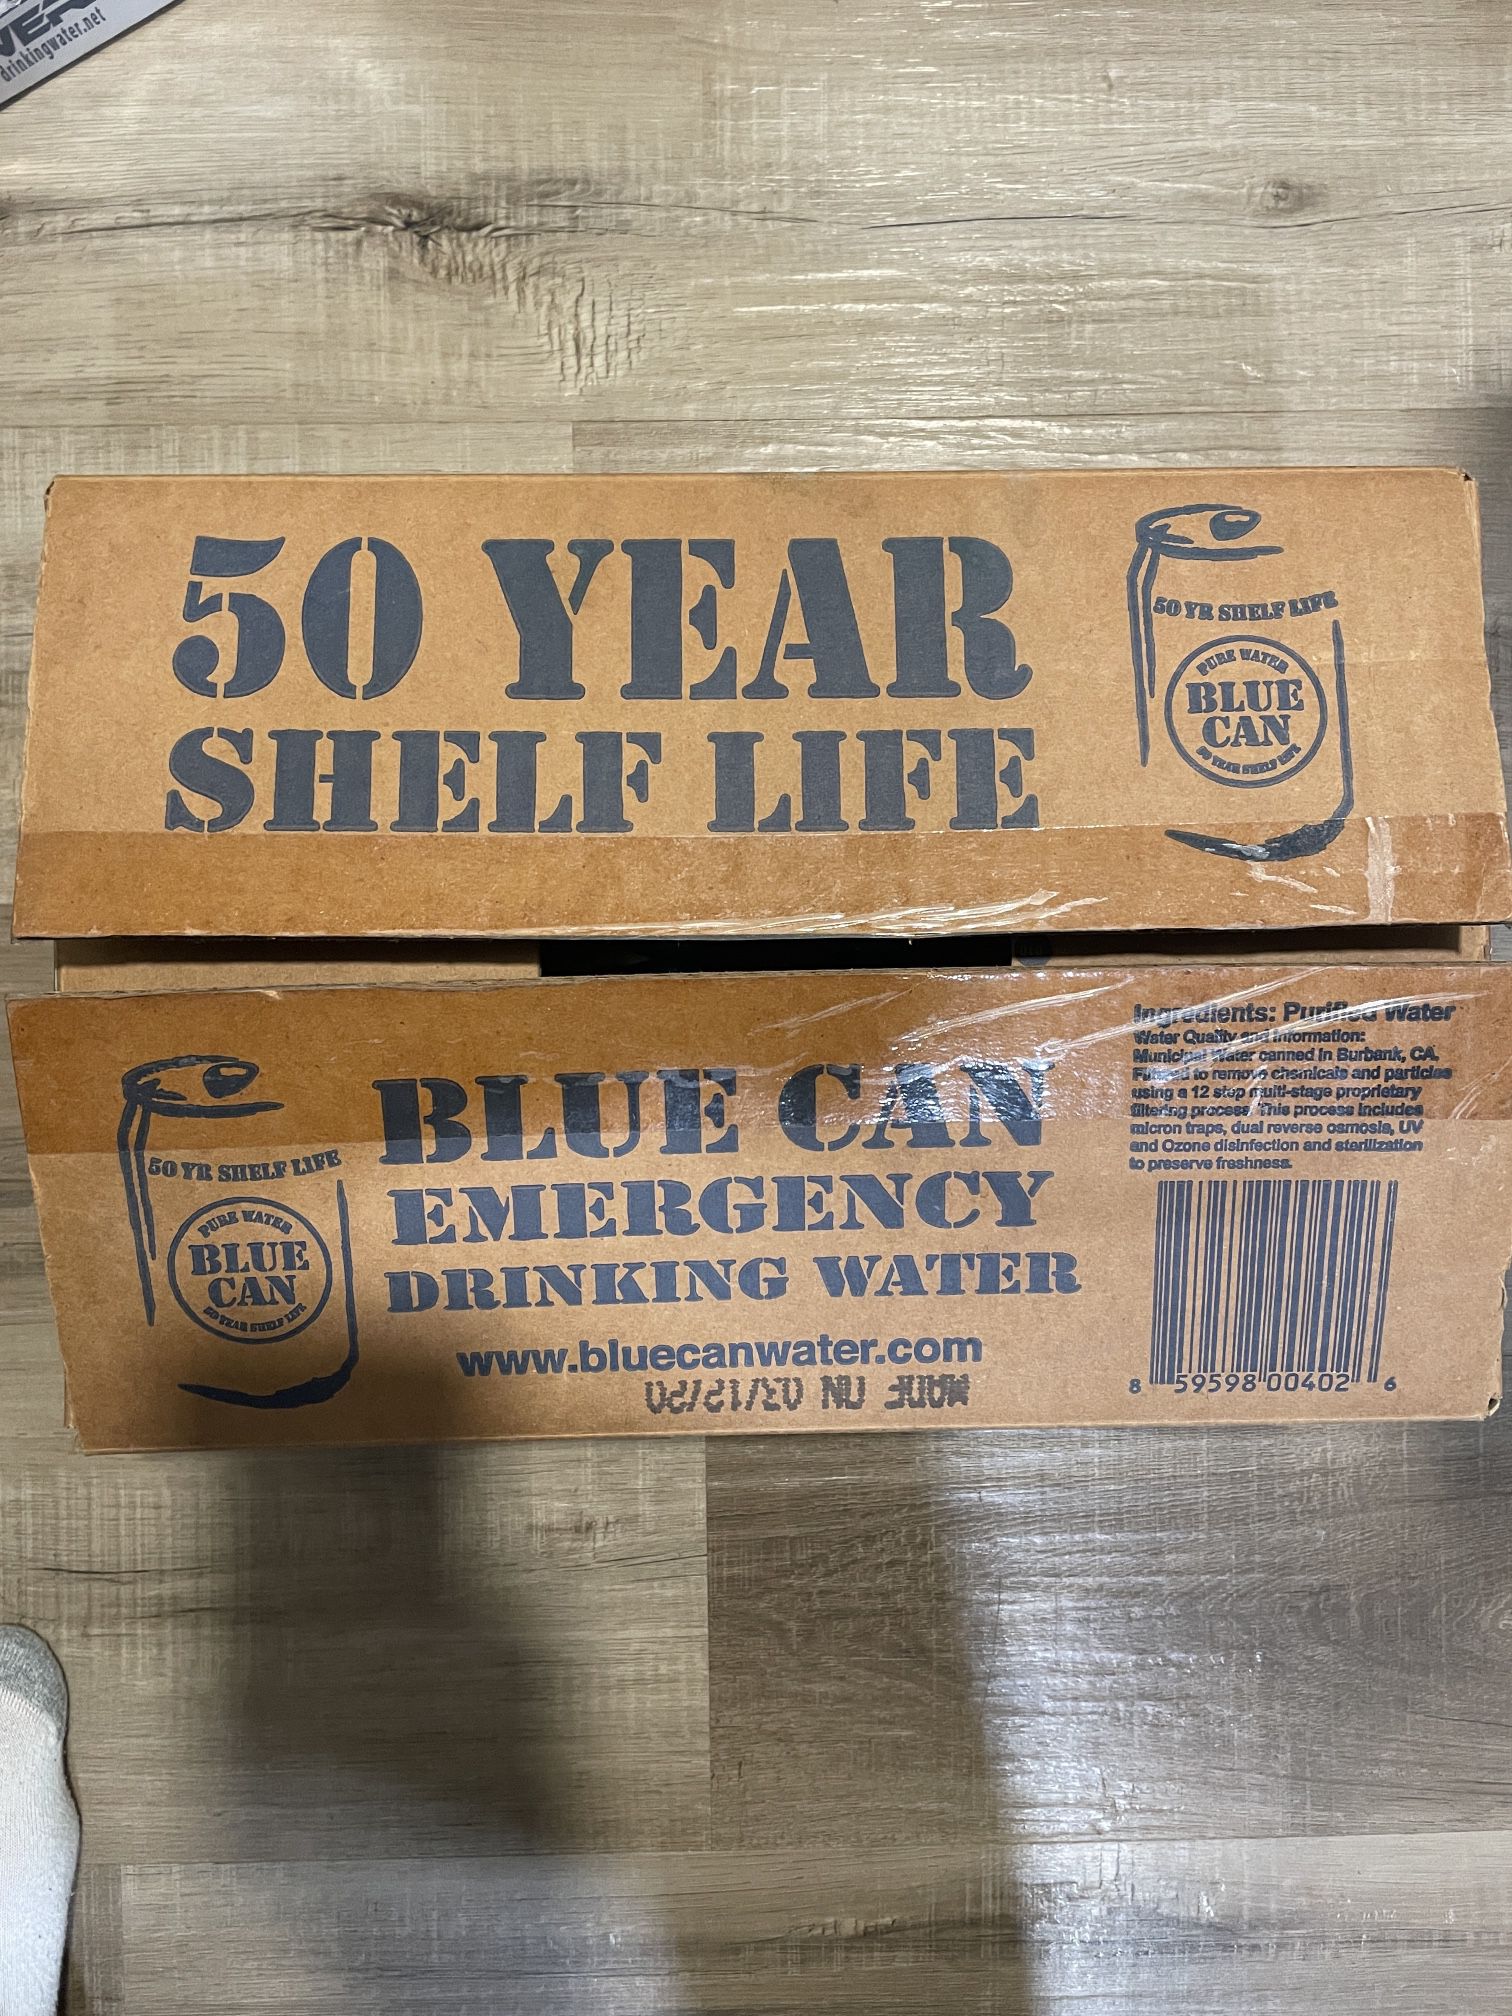 Emergency Drinking Water 50 Year Shelf Life